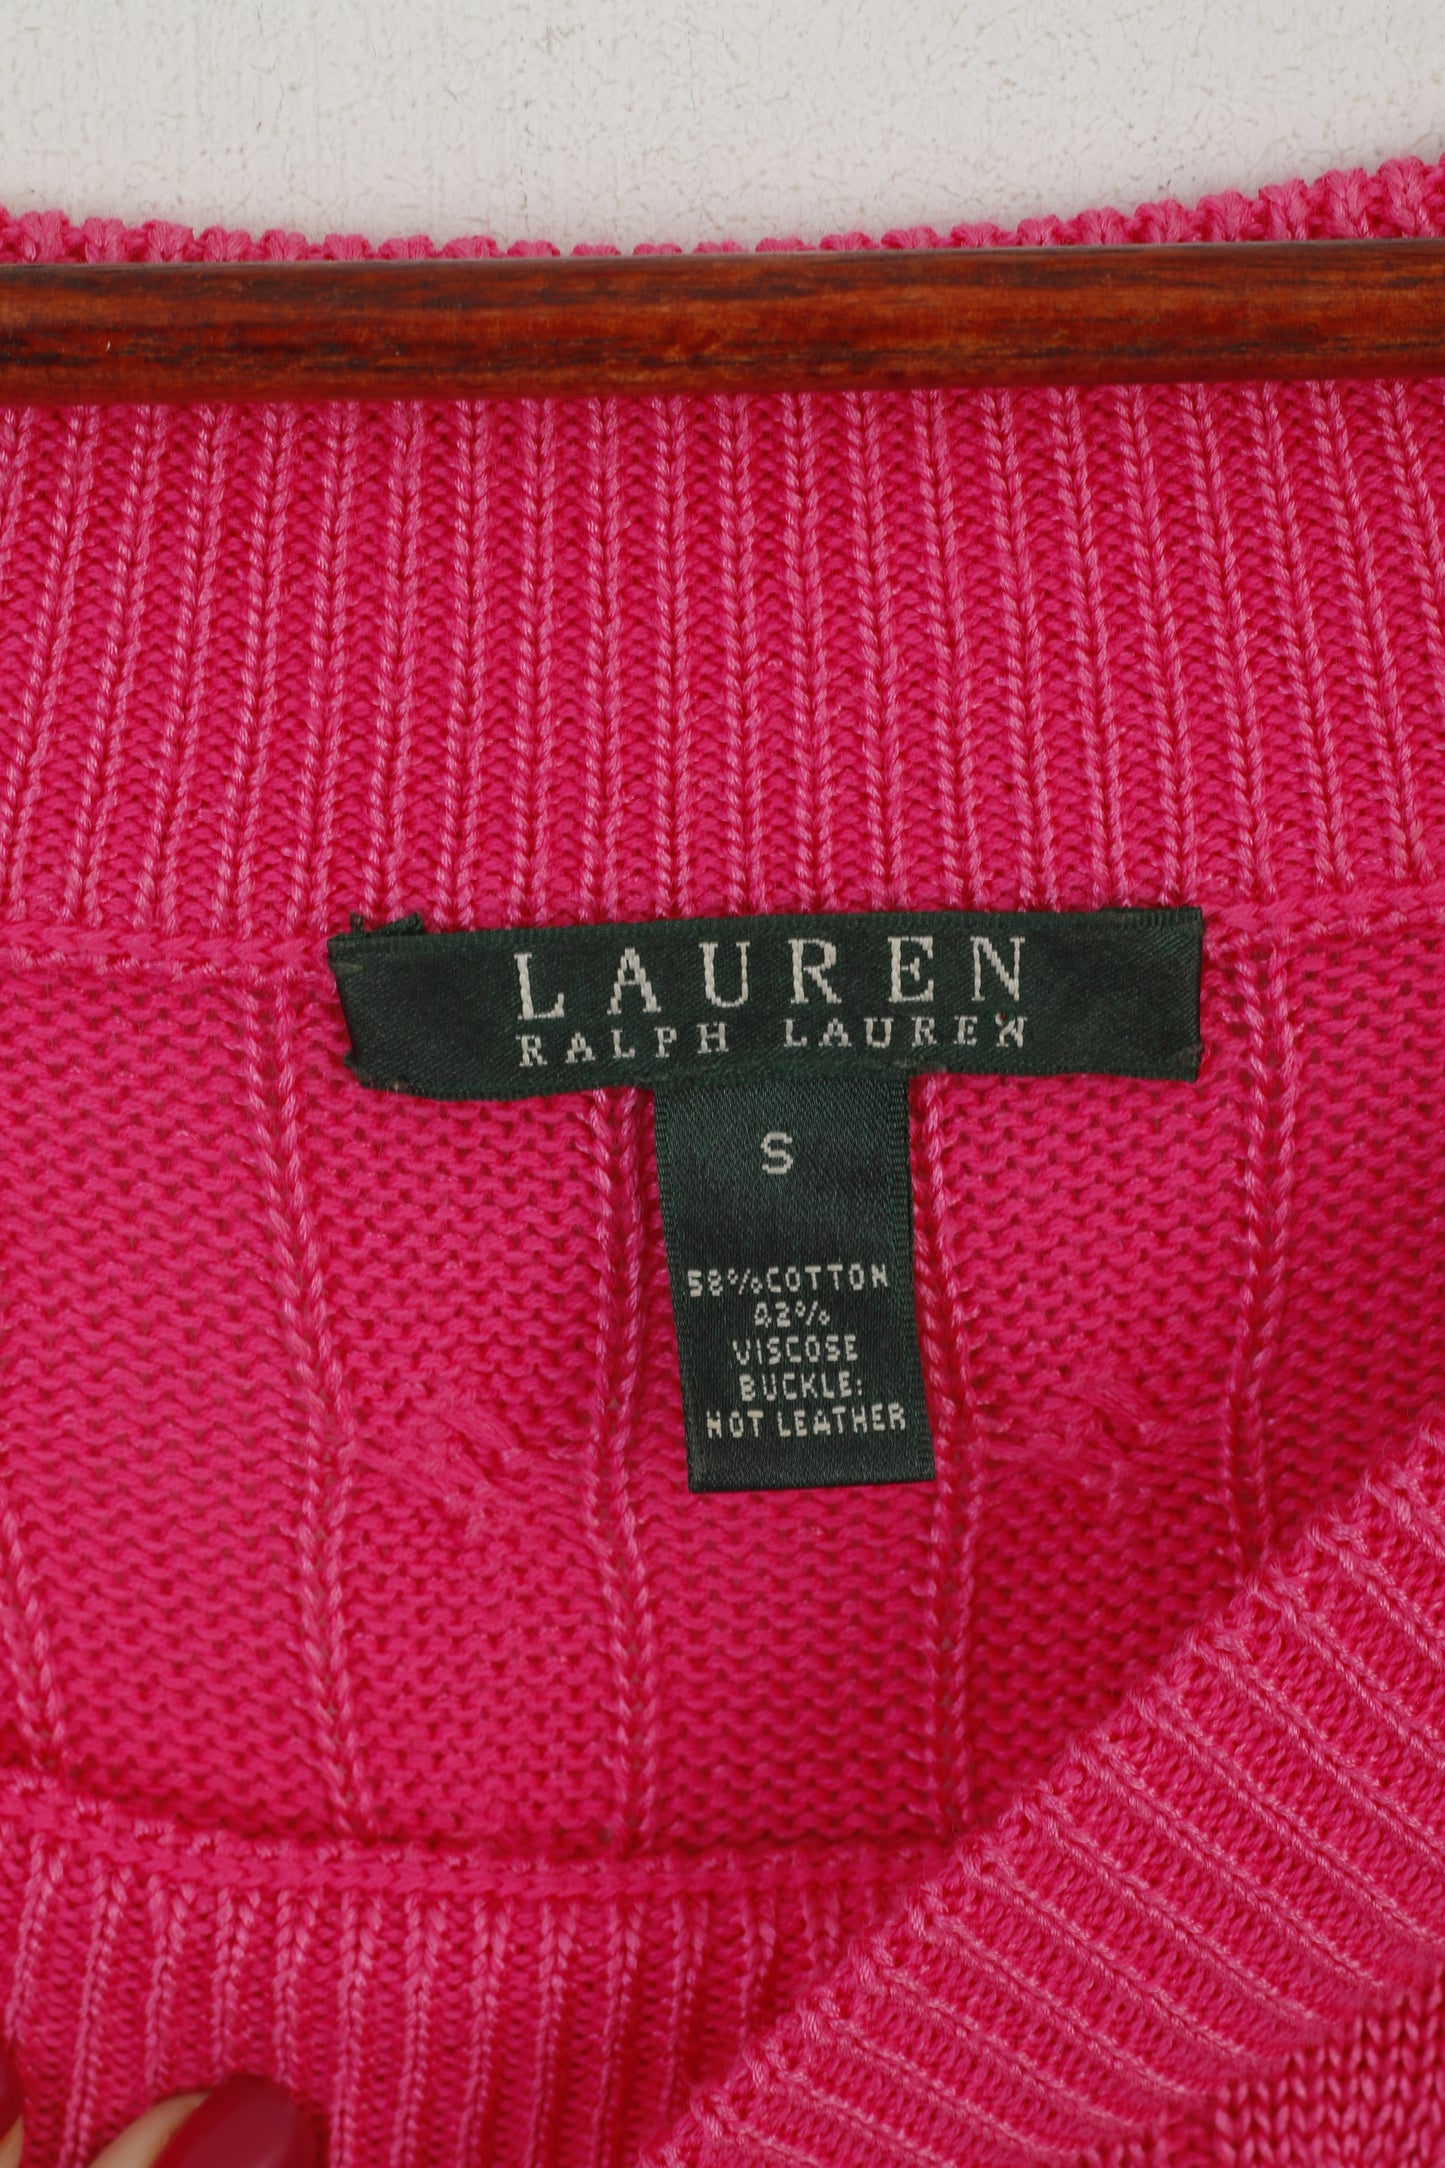 Lauren Ralph Lauren Women S Jumper Pink Cotton Cable Knit Sweet Sweater